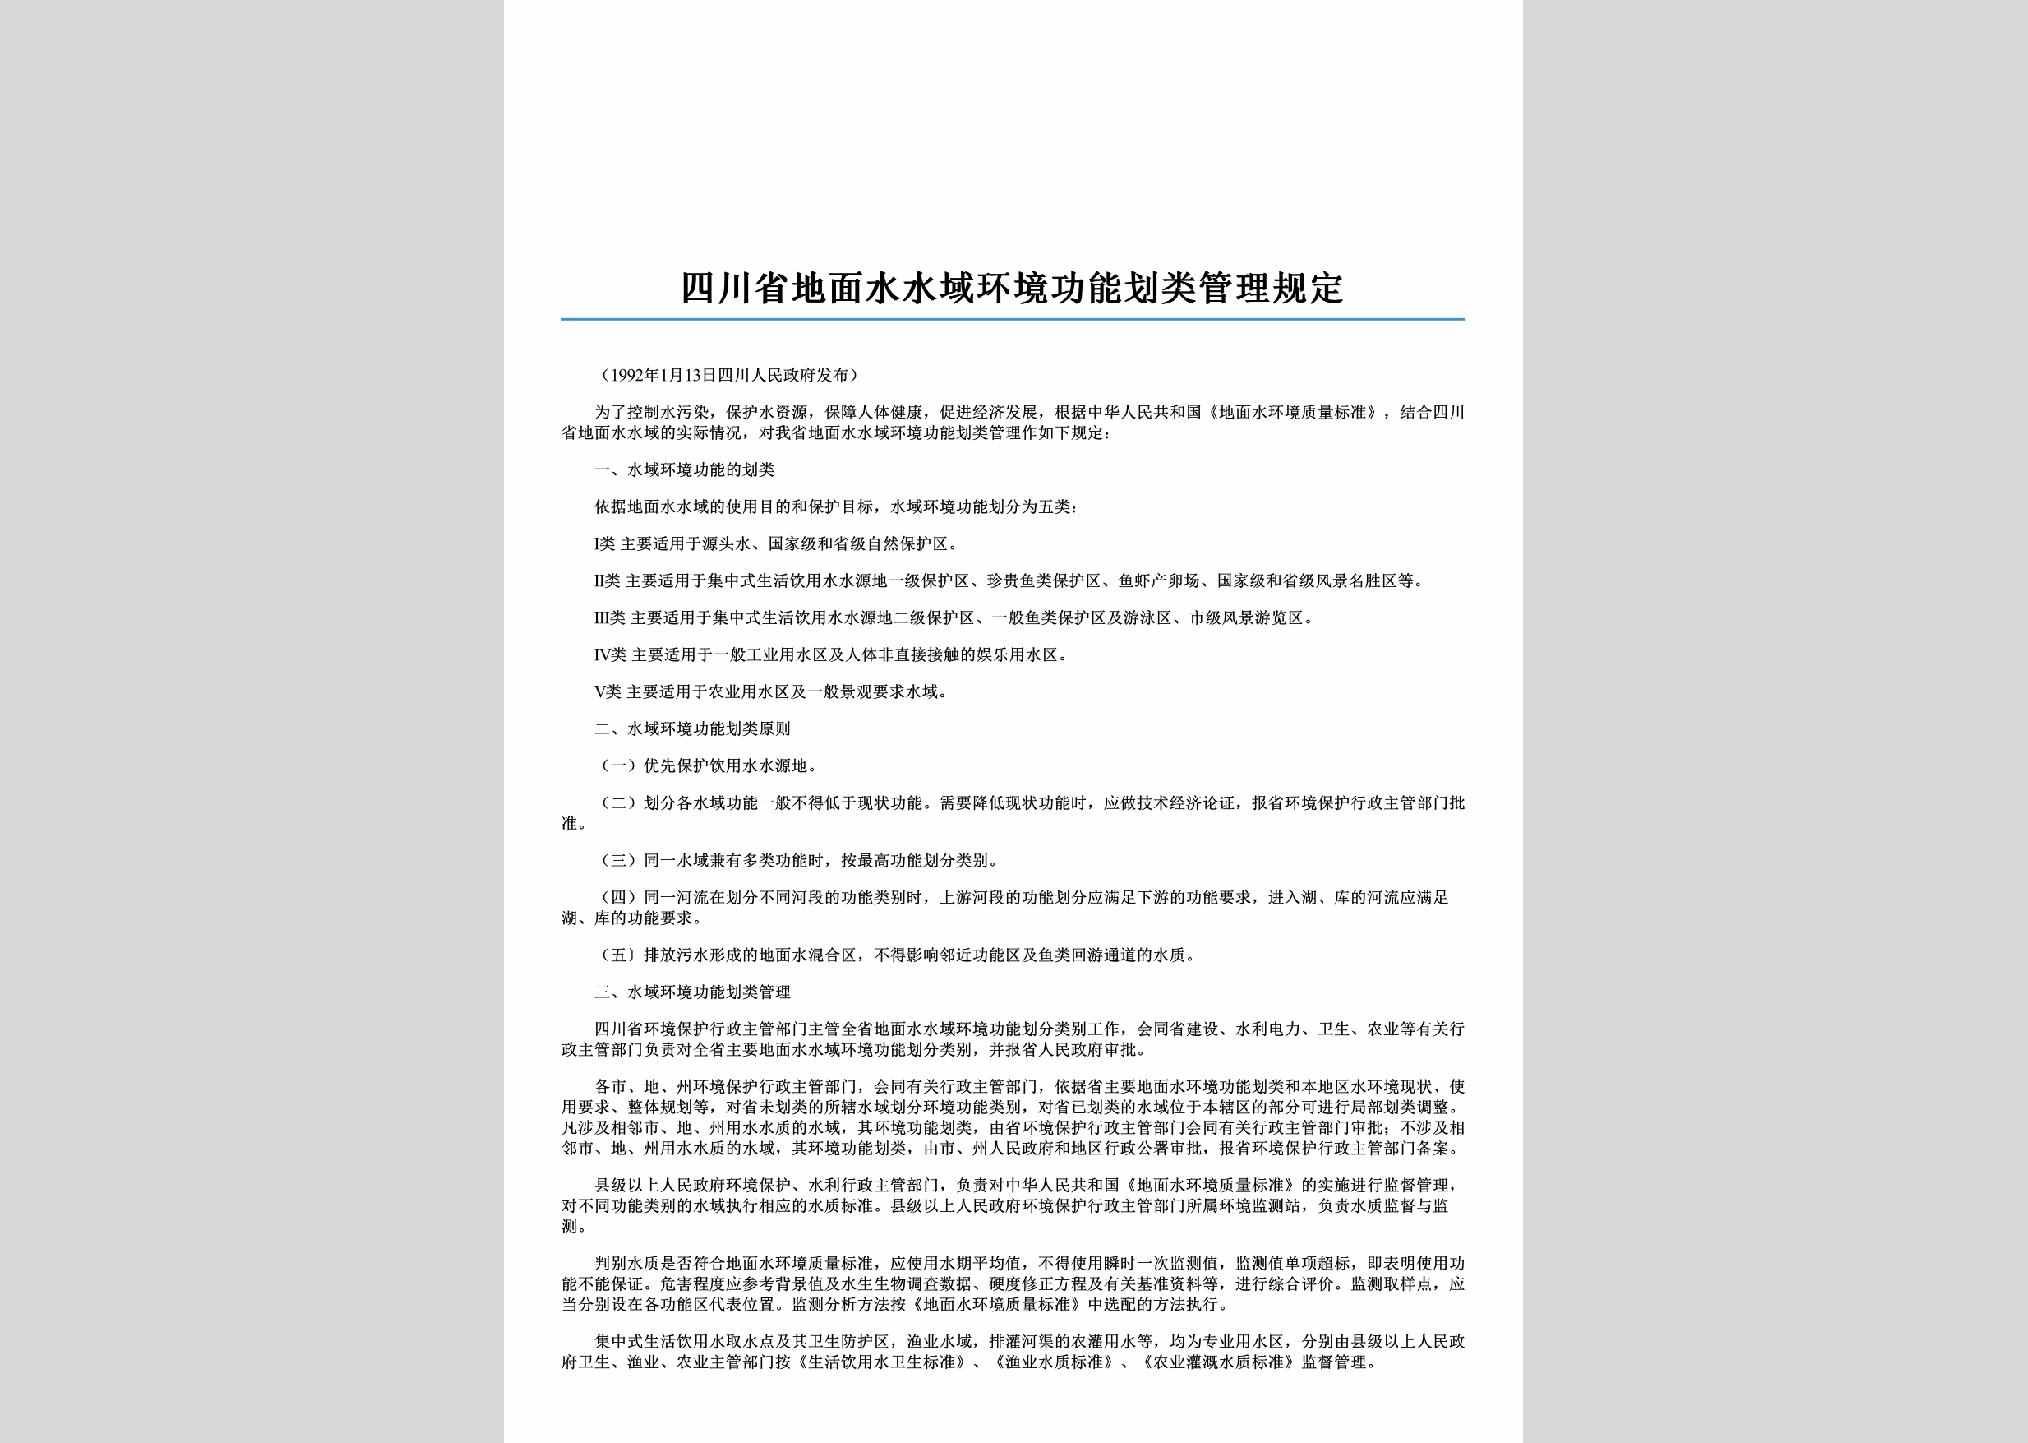 SC-SYHJGLGD-2006：四川省地面水水域环境功能划类管理规定